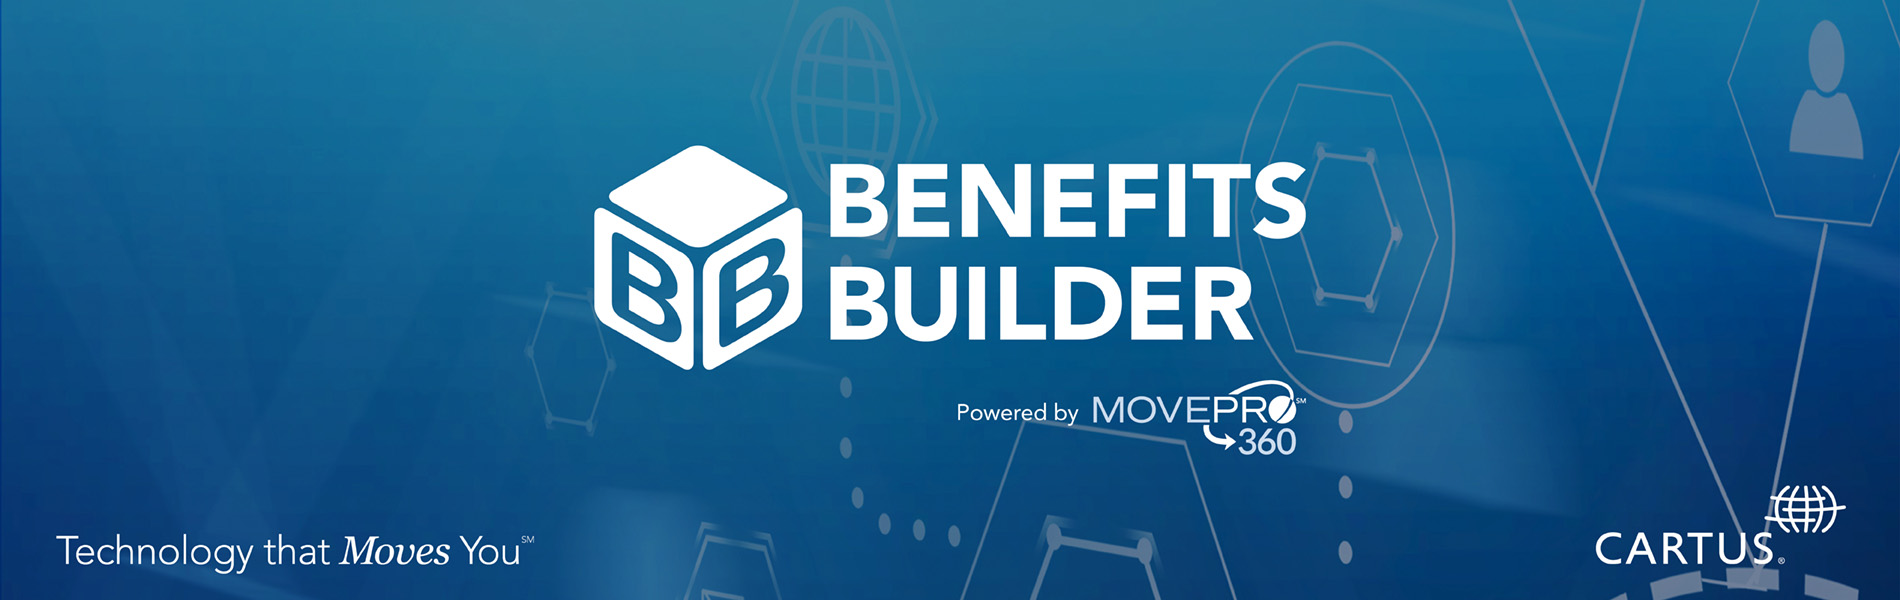 Benefits Builder banner